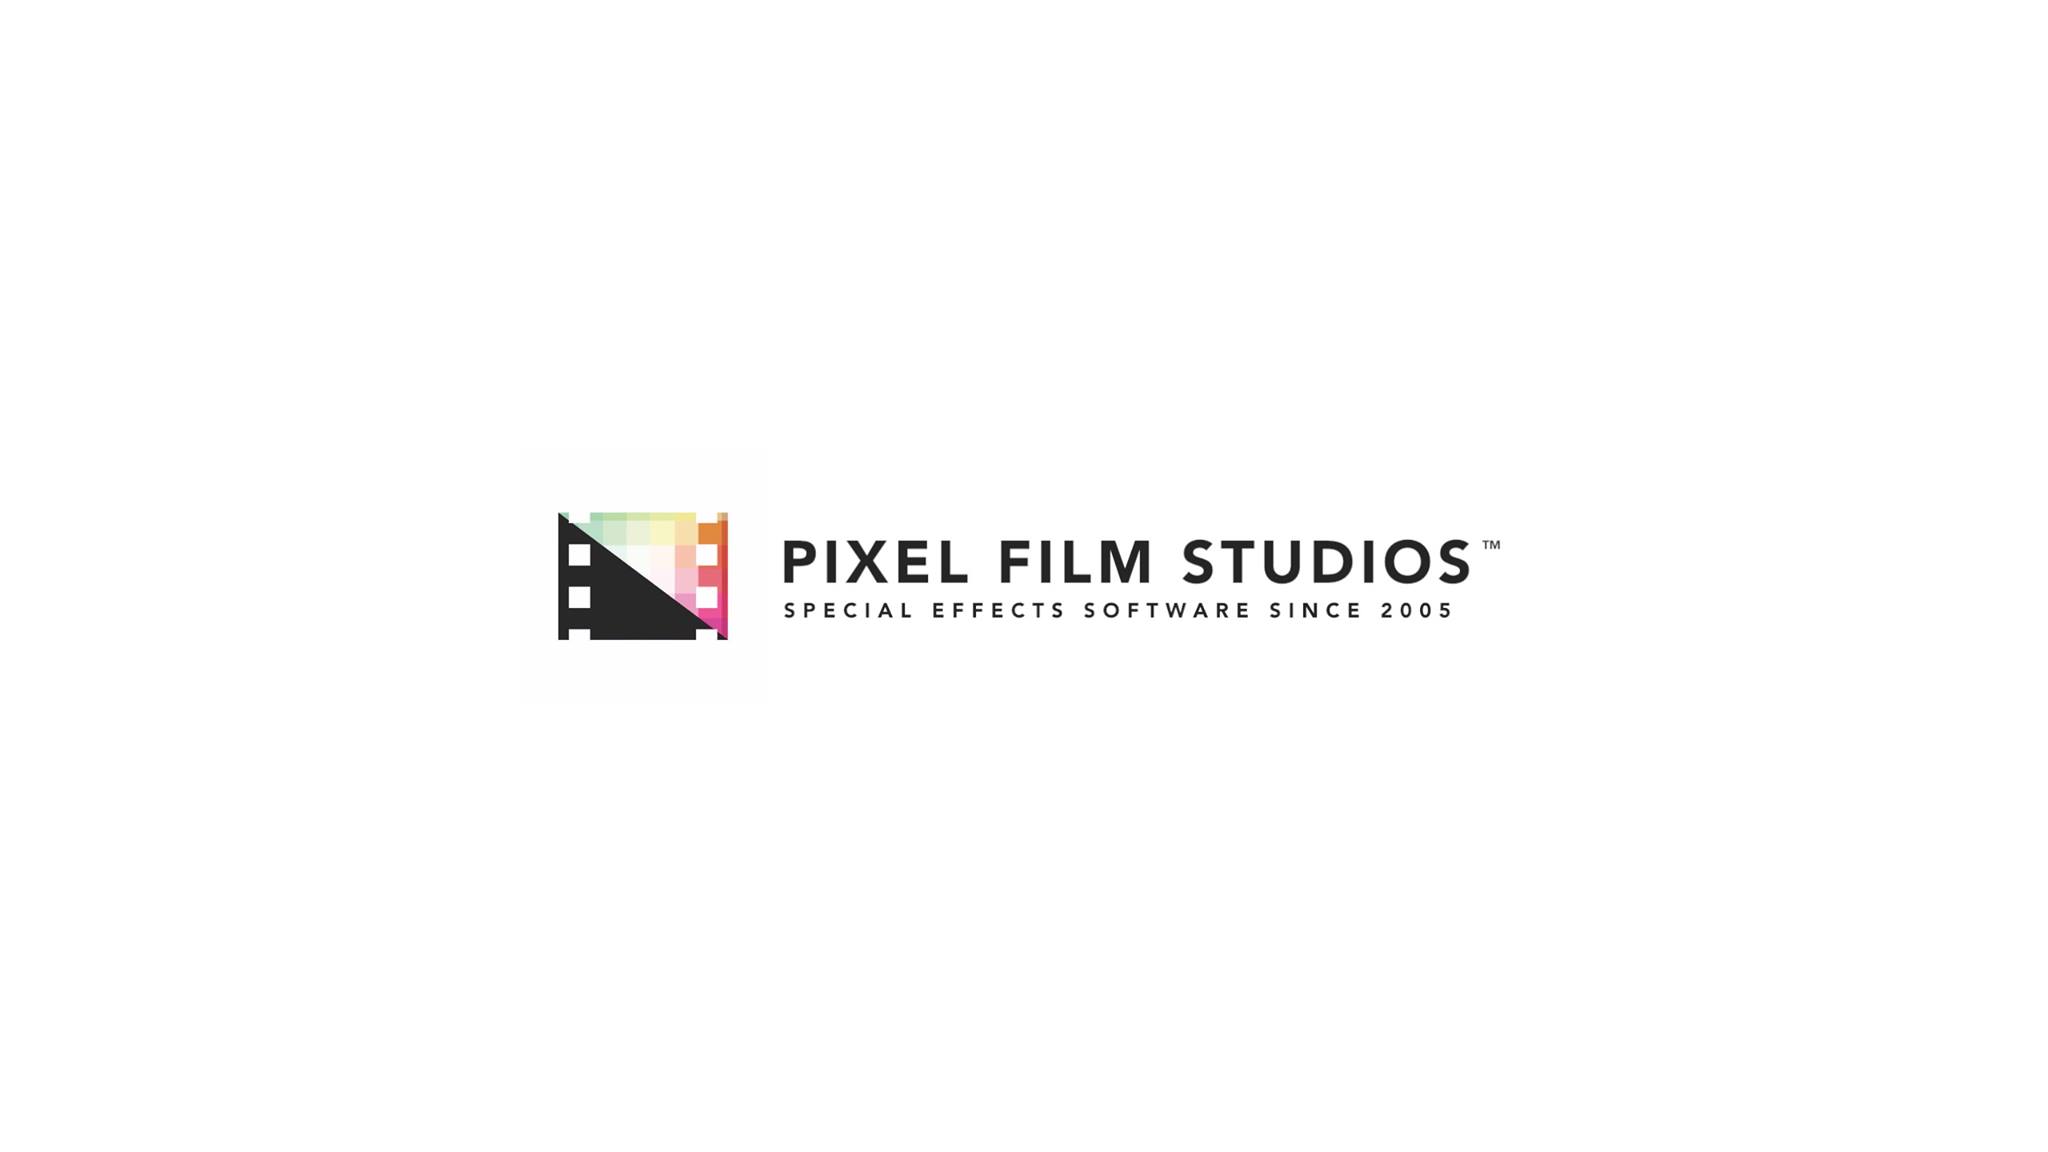 video editor moviemator image looks pixelated